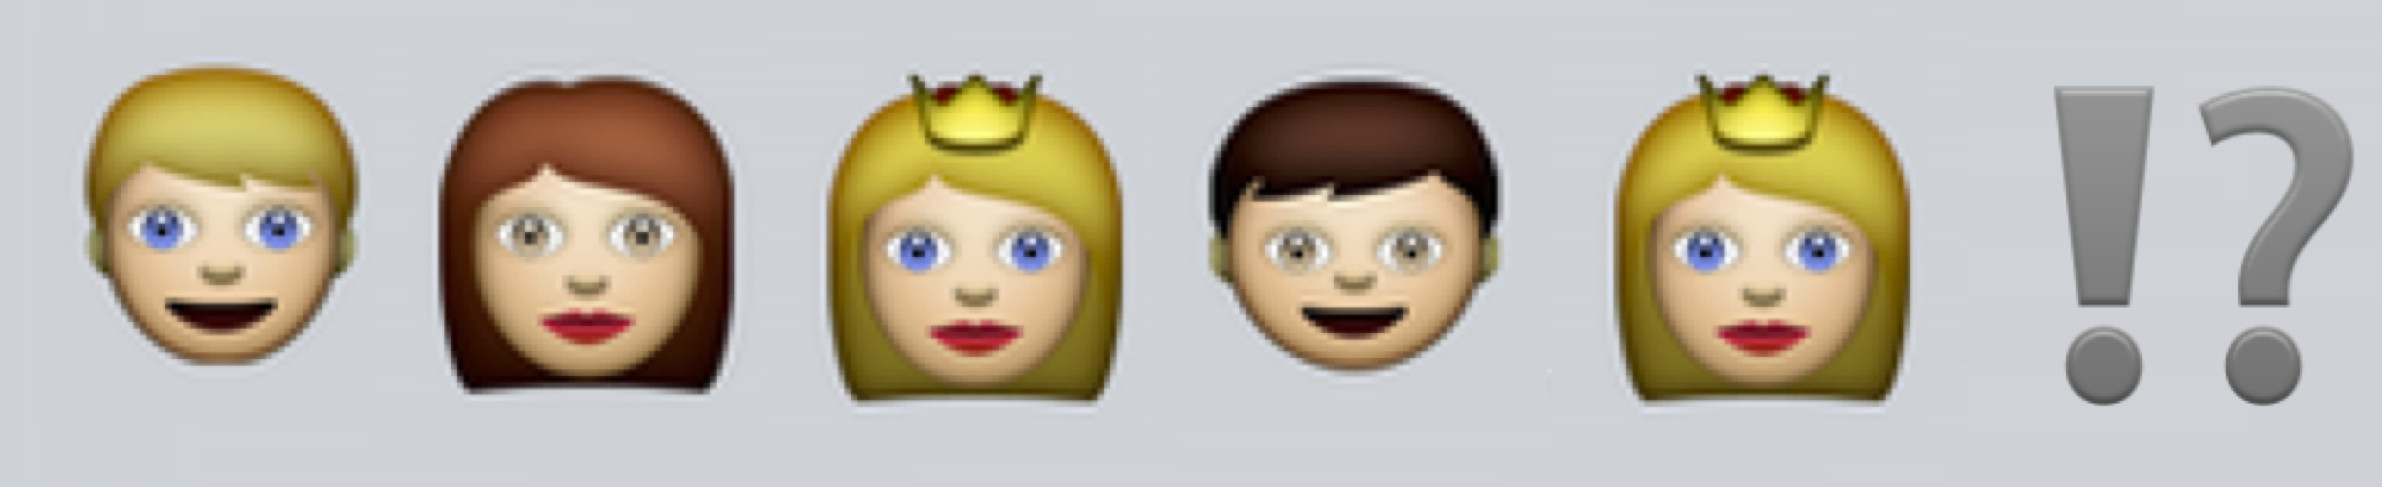 emoji family